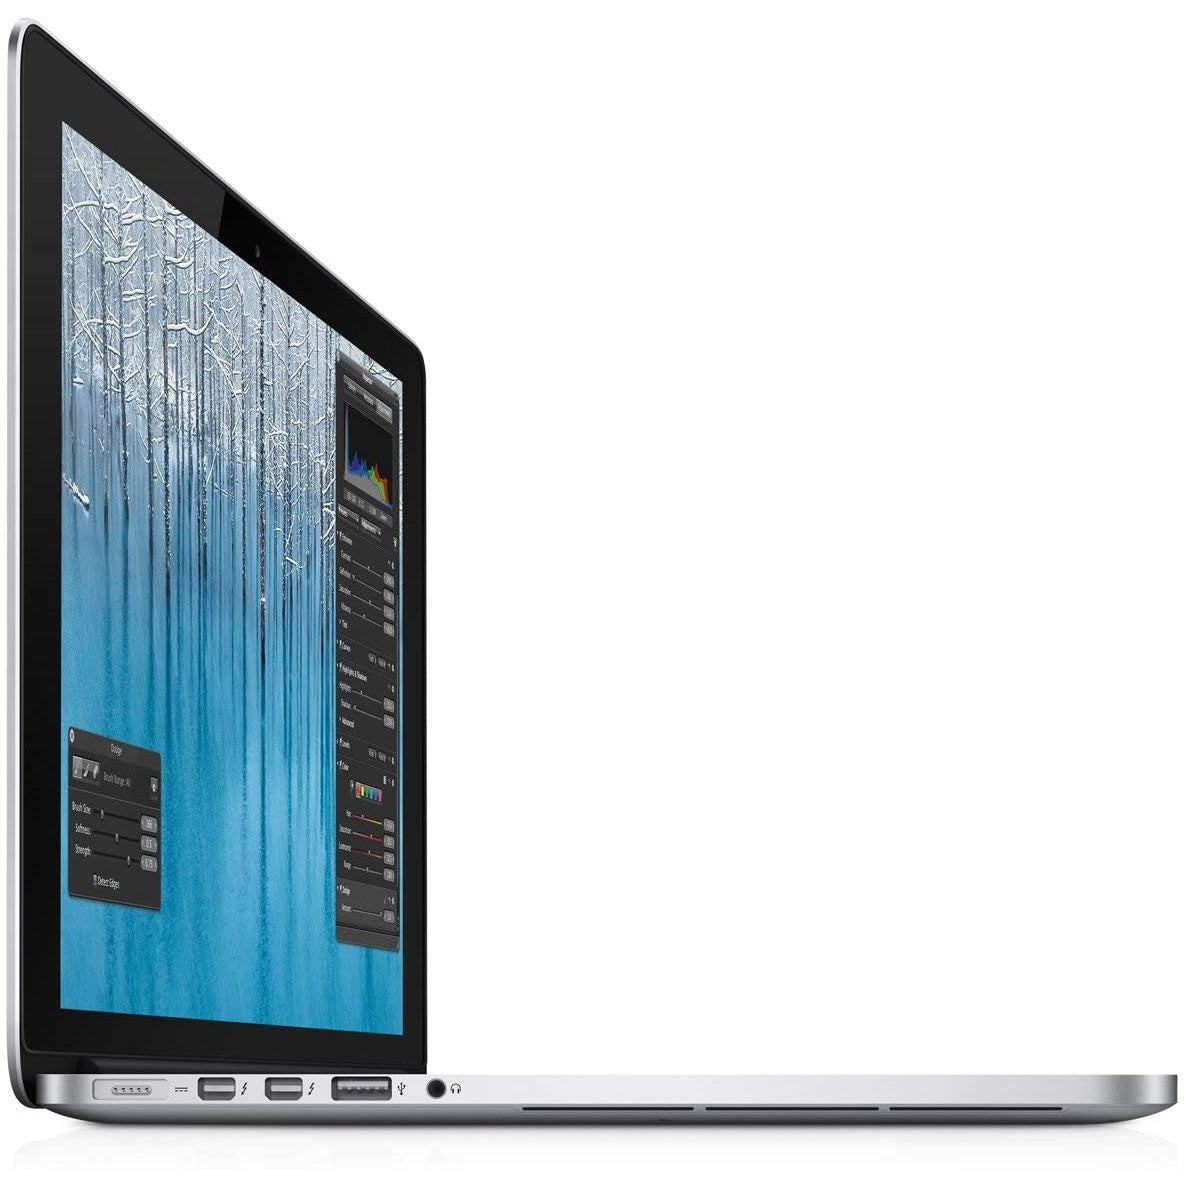 Apple MacBook Pro 15" MC975LL/A Laptop, Intel Core i7, 8GB, 256GB, Silver